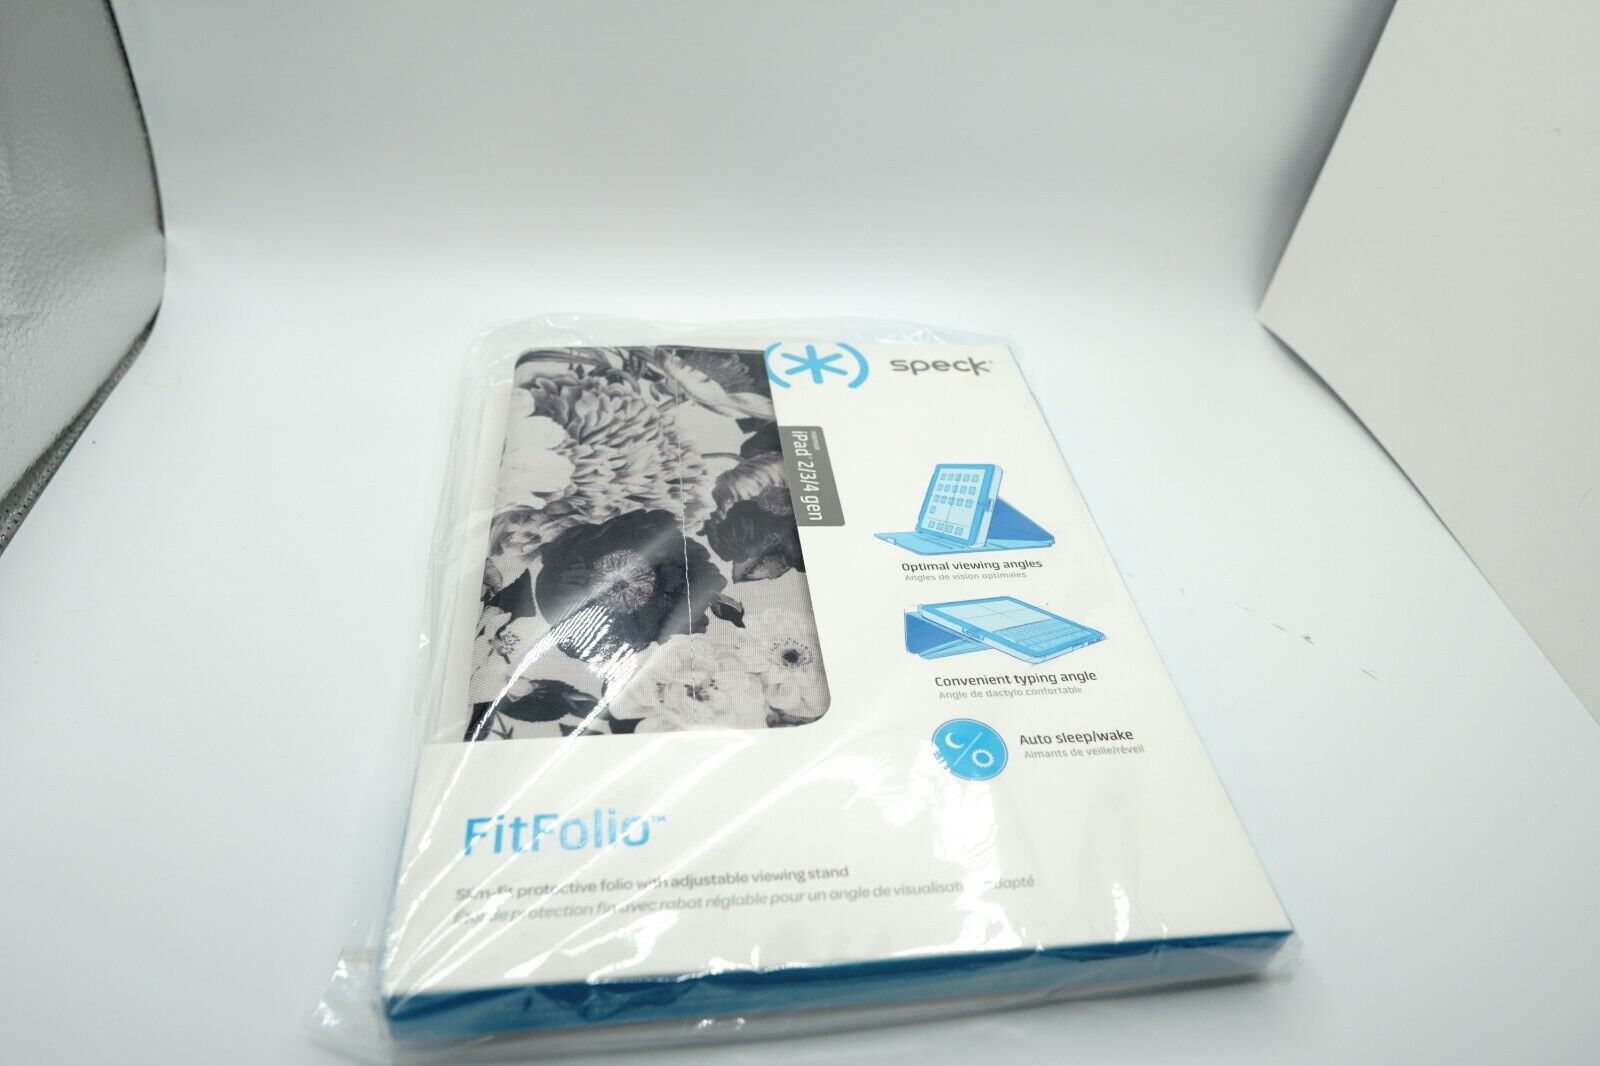 Speck FitFolio for iPad 2/ 3/ 4 Gen.  NEW in original plastic.